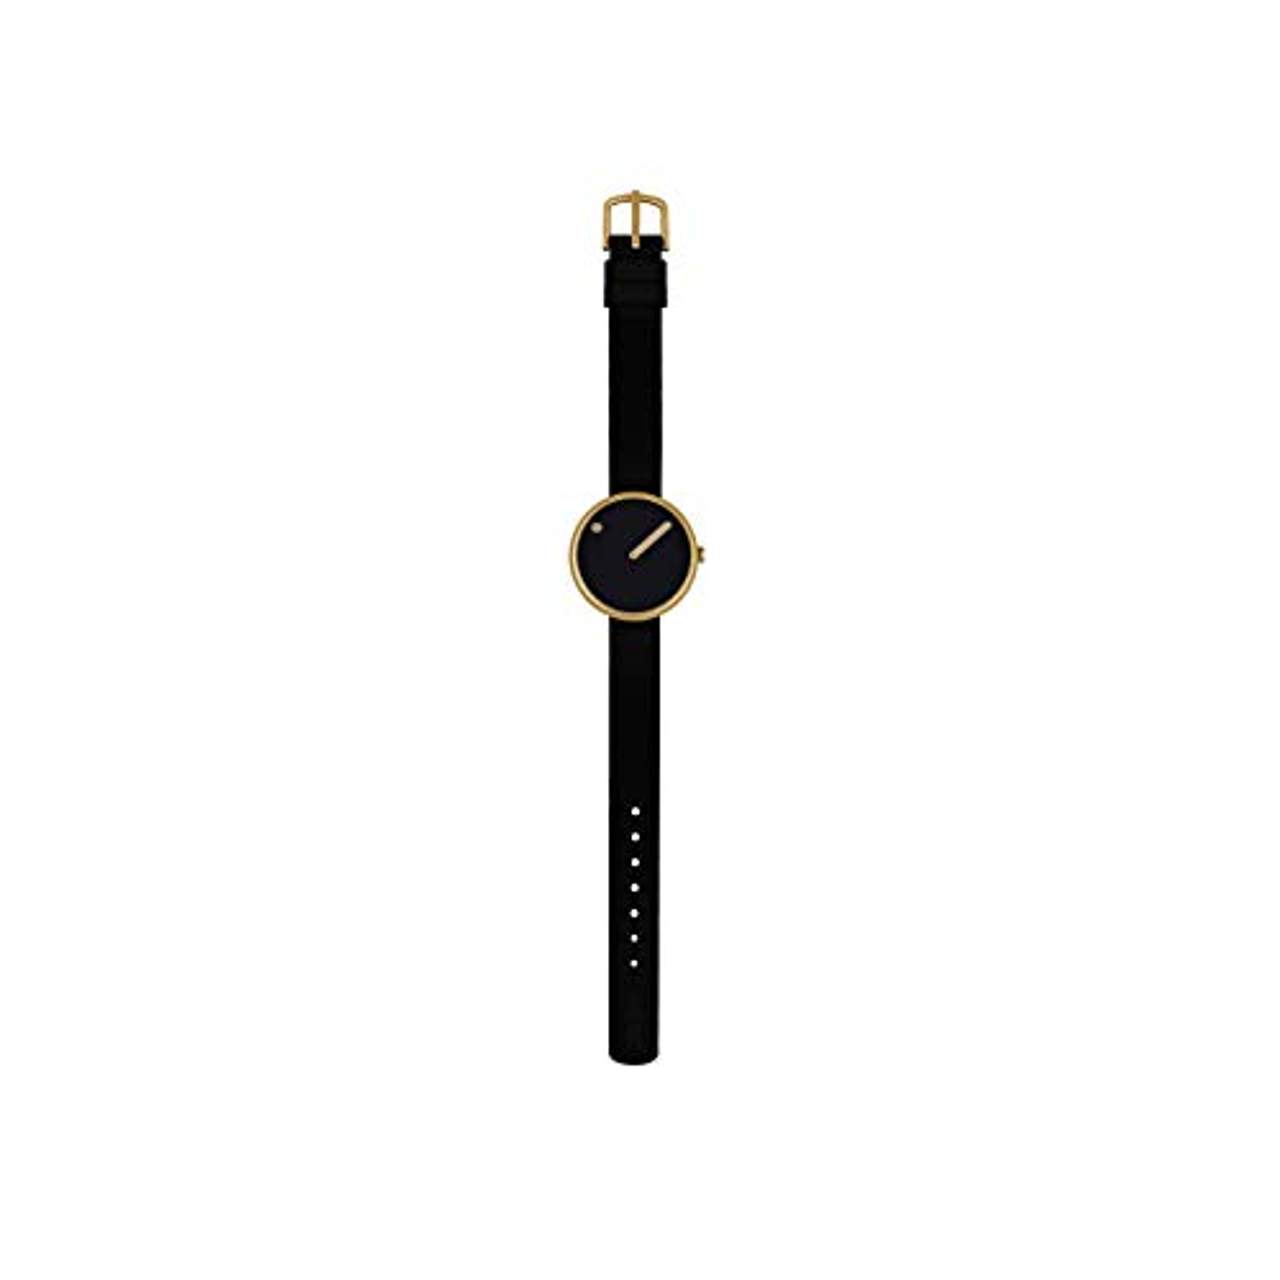 Picto Damen-Armbanduhr 30 mm goldfarben